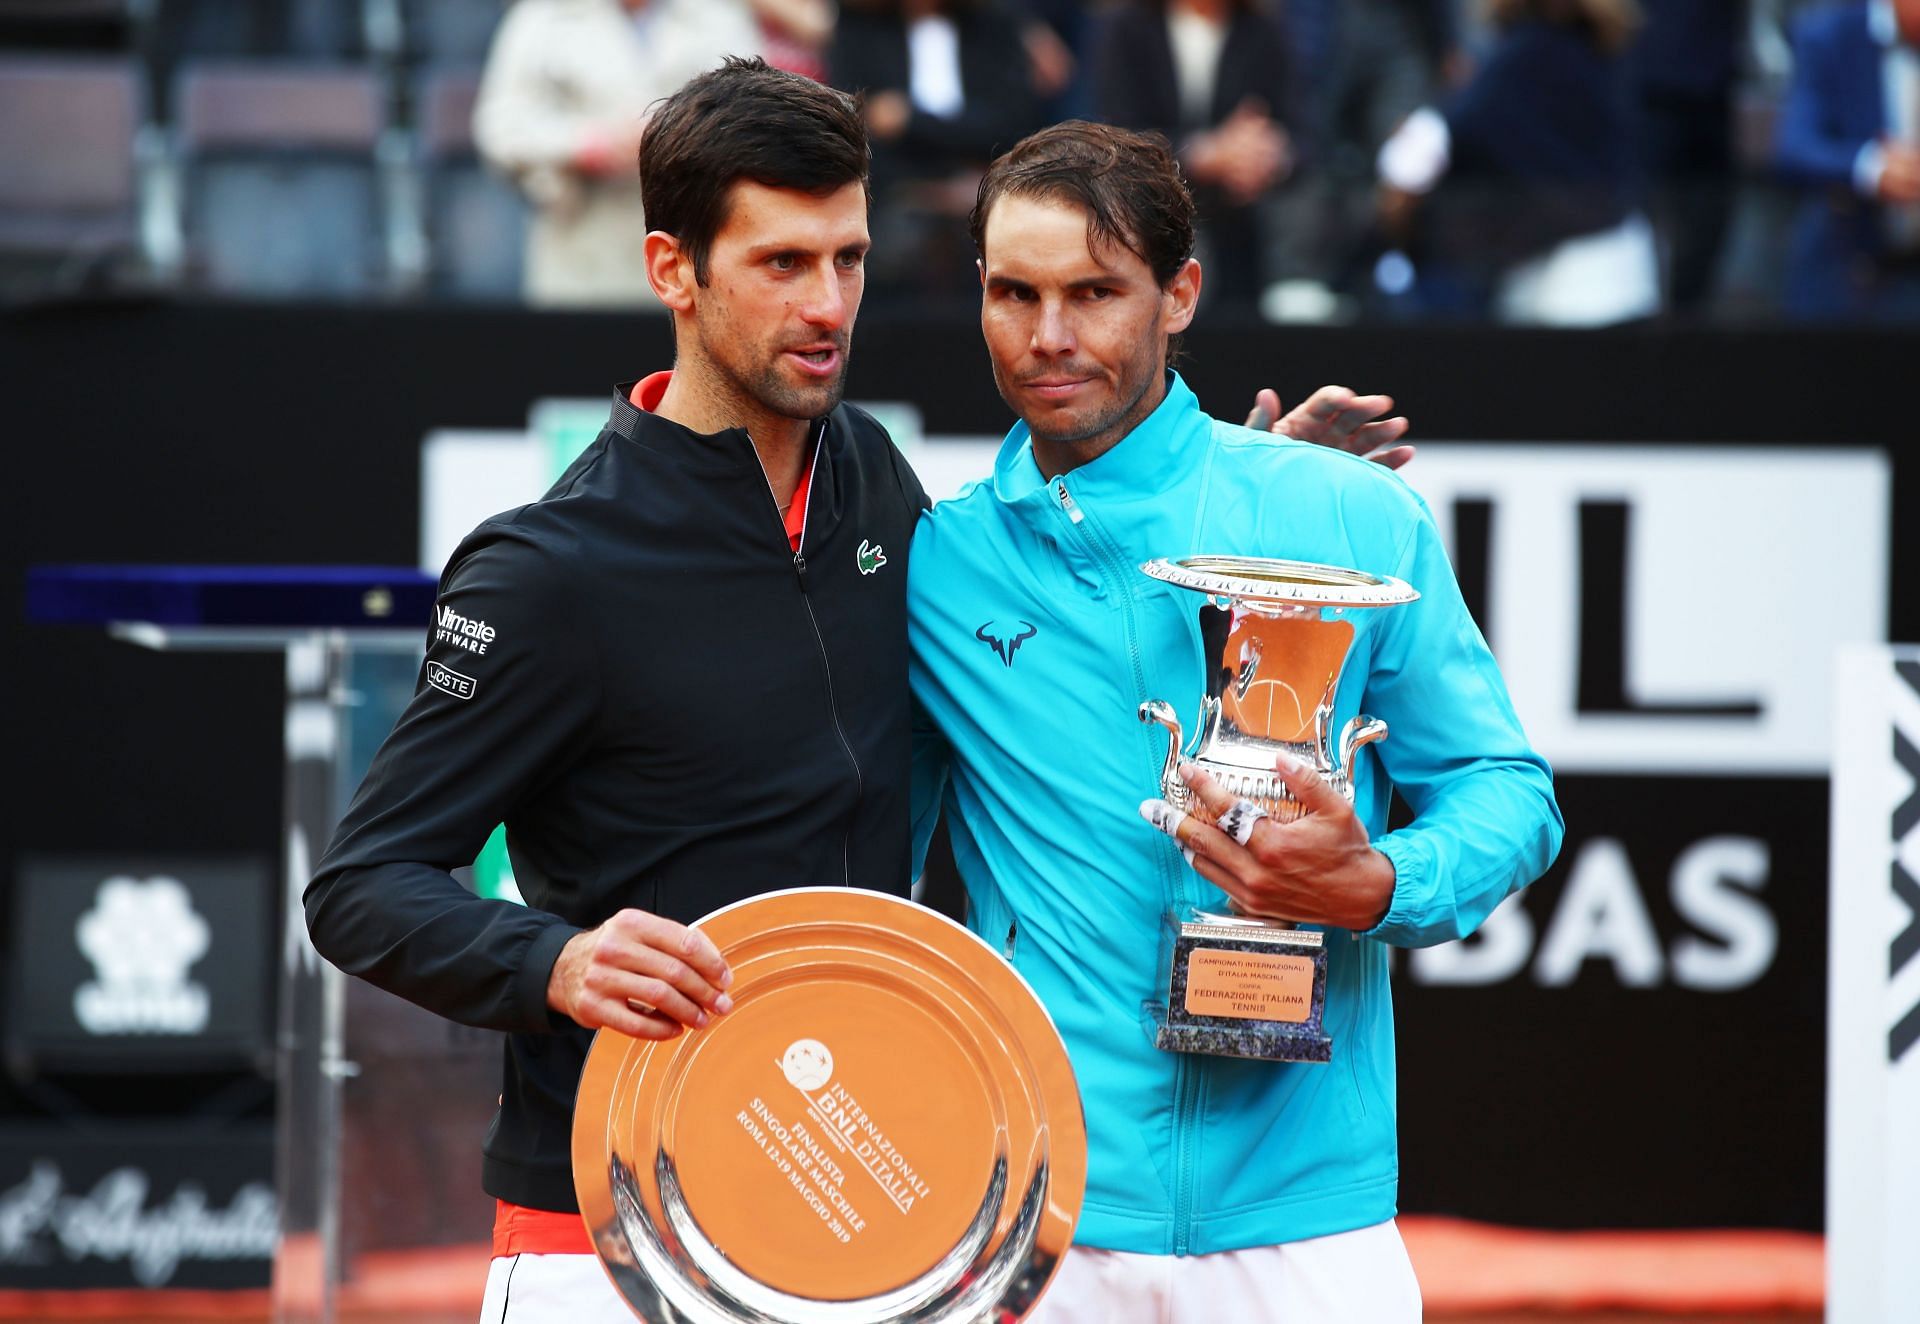 Where can Novak Djokovic and Rafael Nadal meet at the Paris Olympics